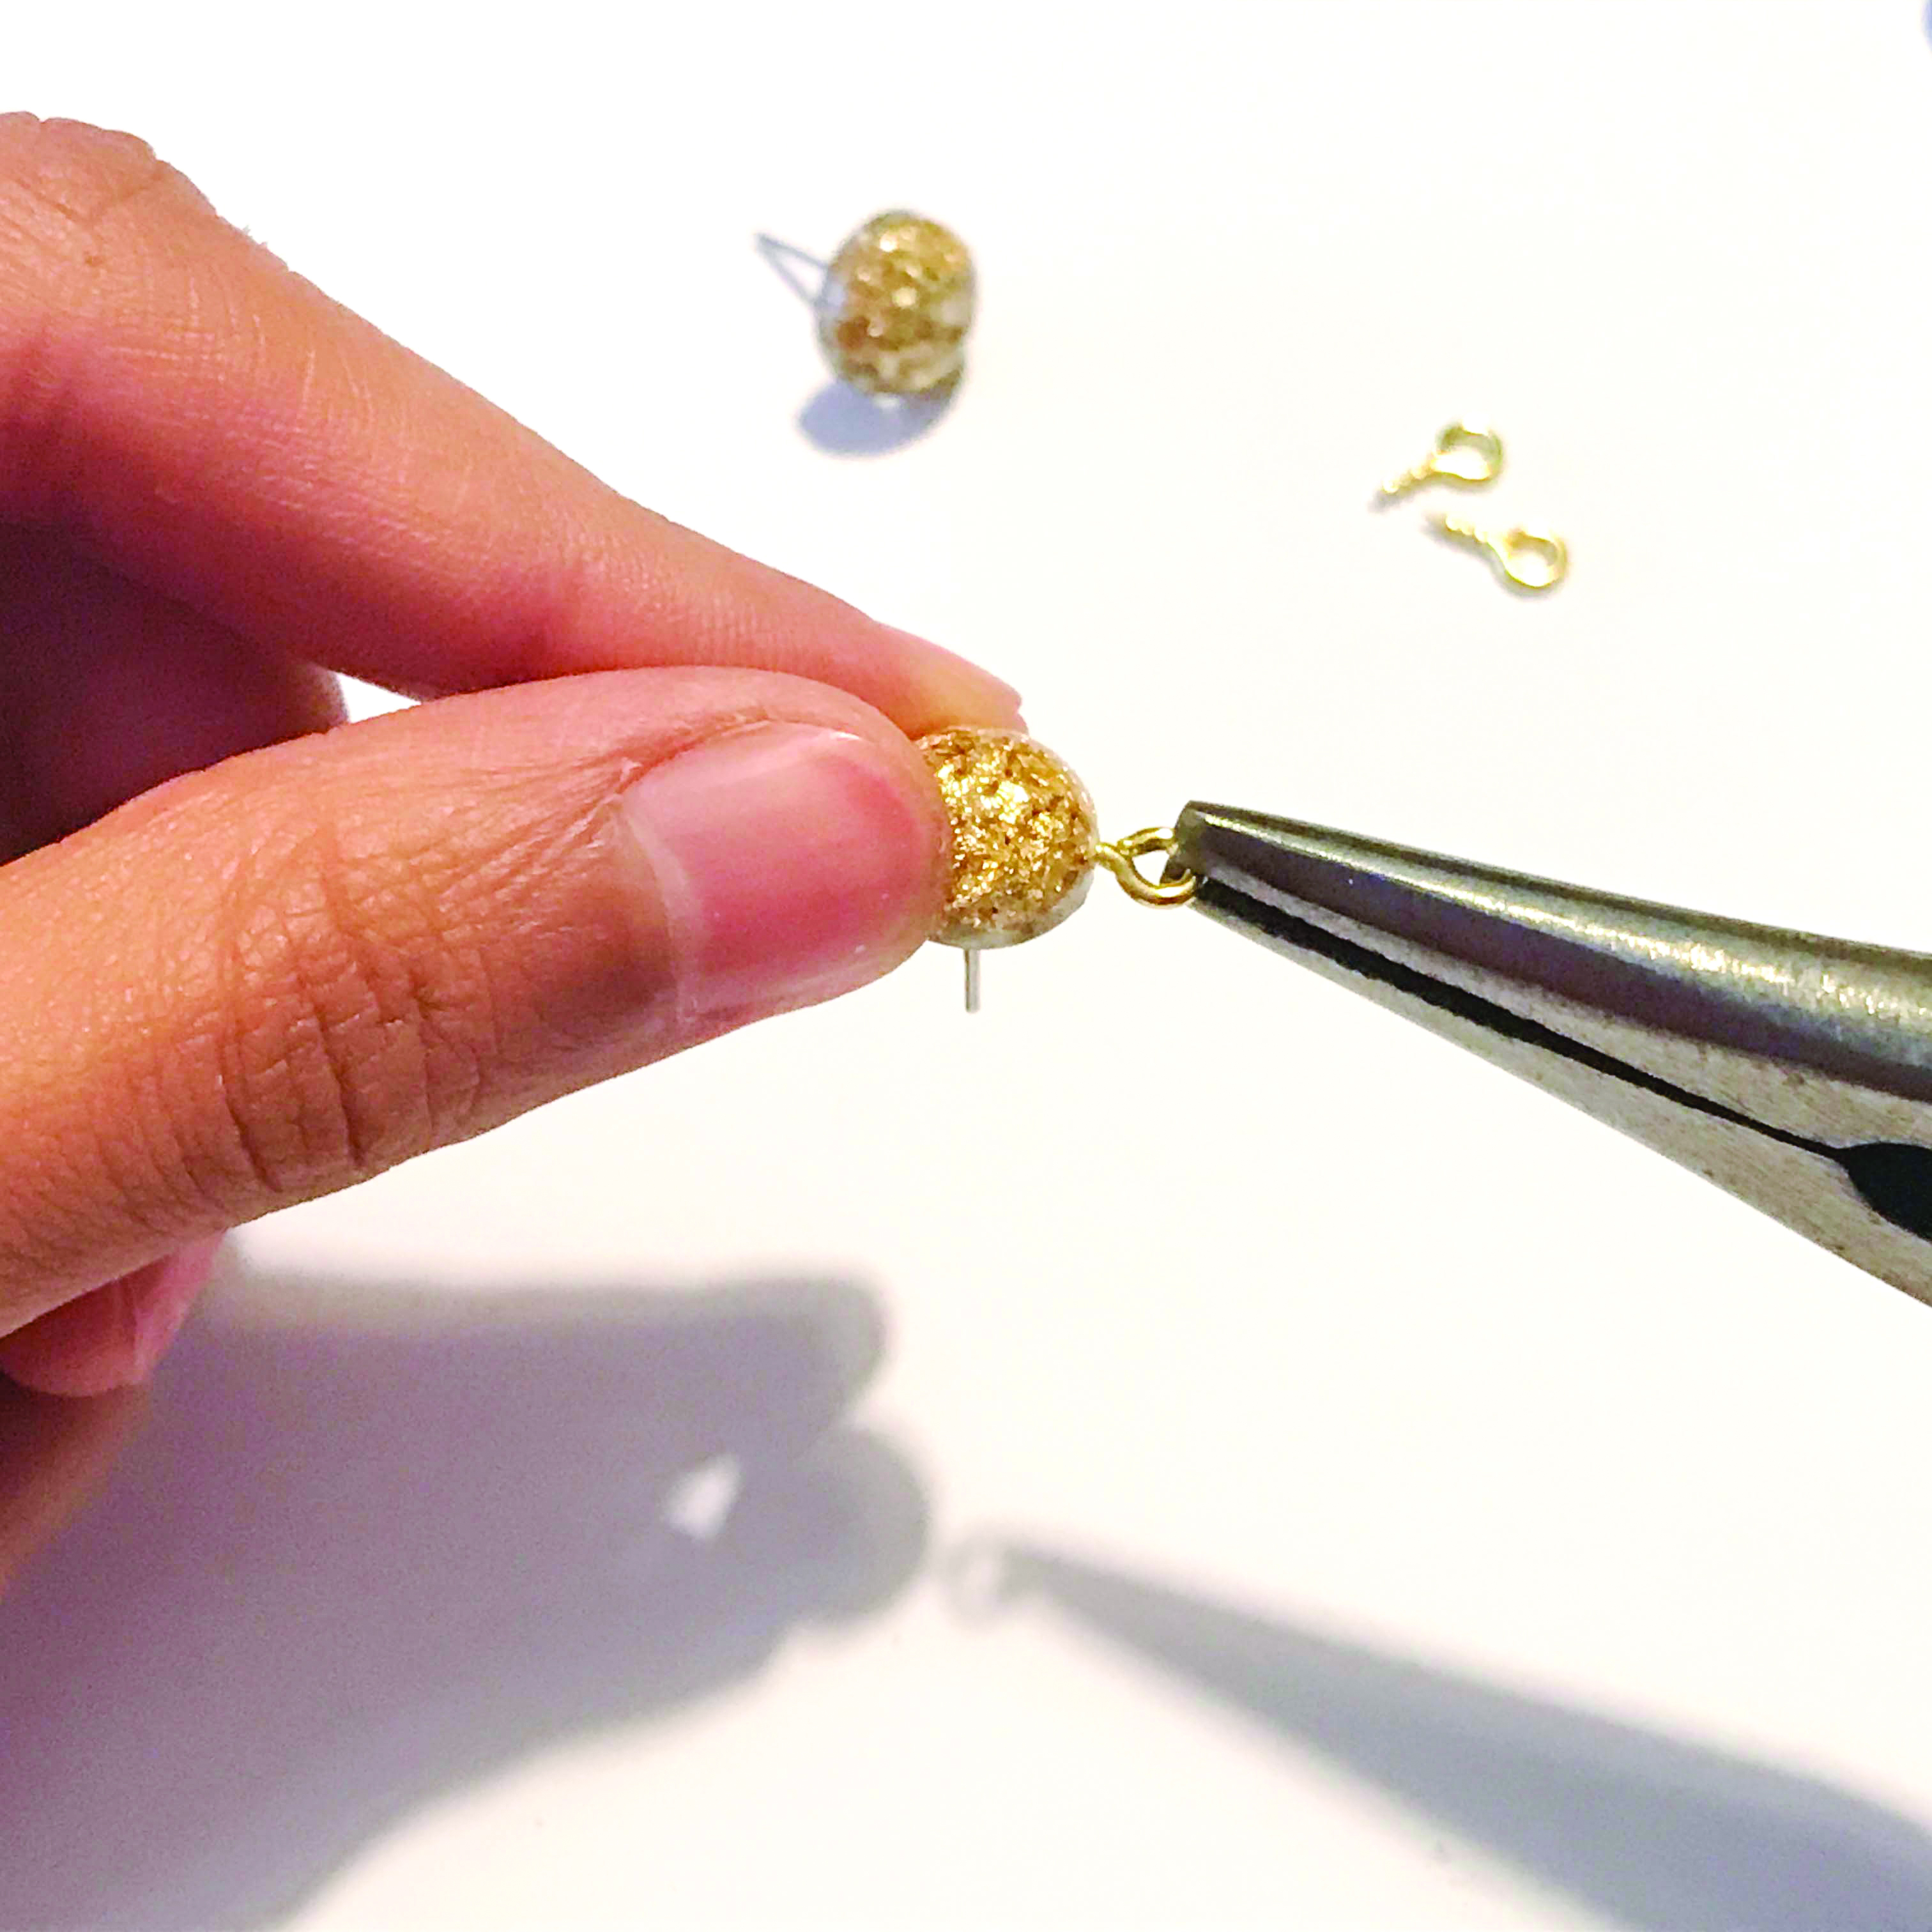 How to make resin earrings Step 10